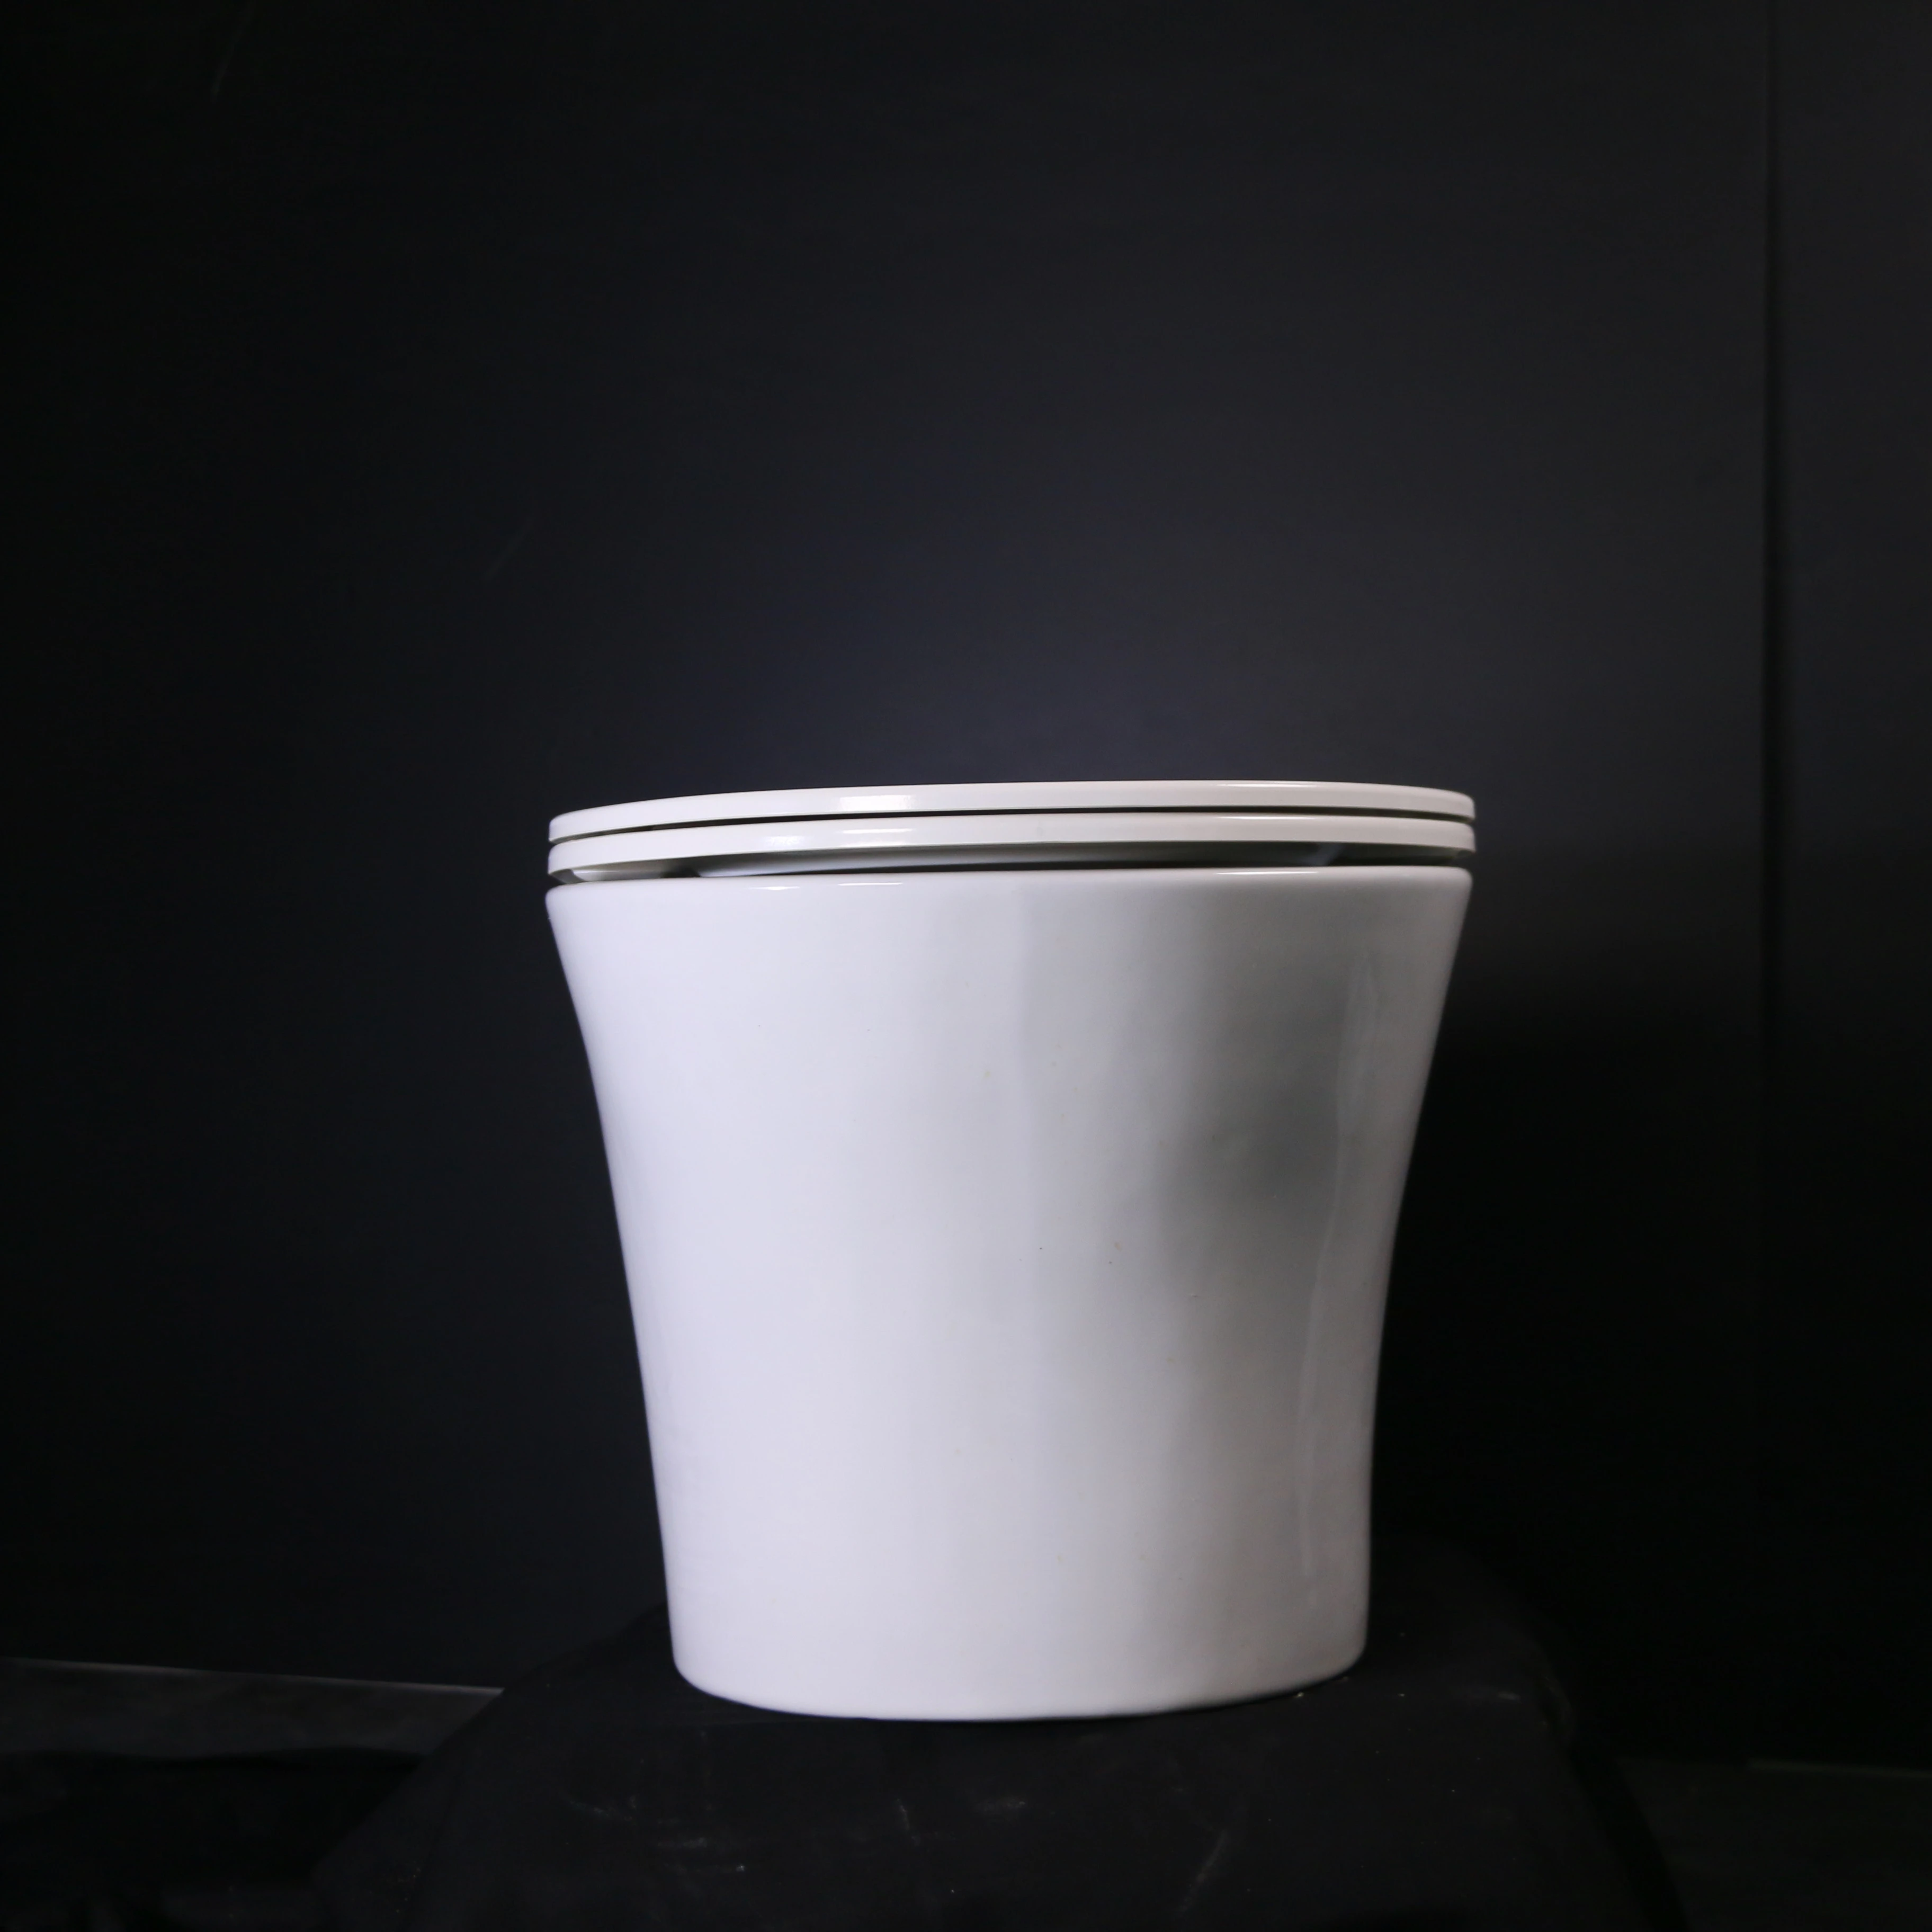 Medyag MGZ-61 white European Style wall hung toilet bowl bathroom toilet CE rimless ceramic wall hung toilet